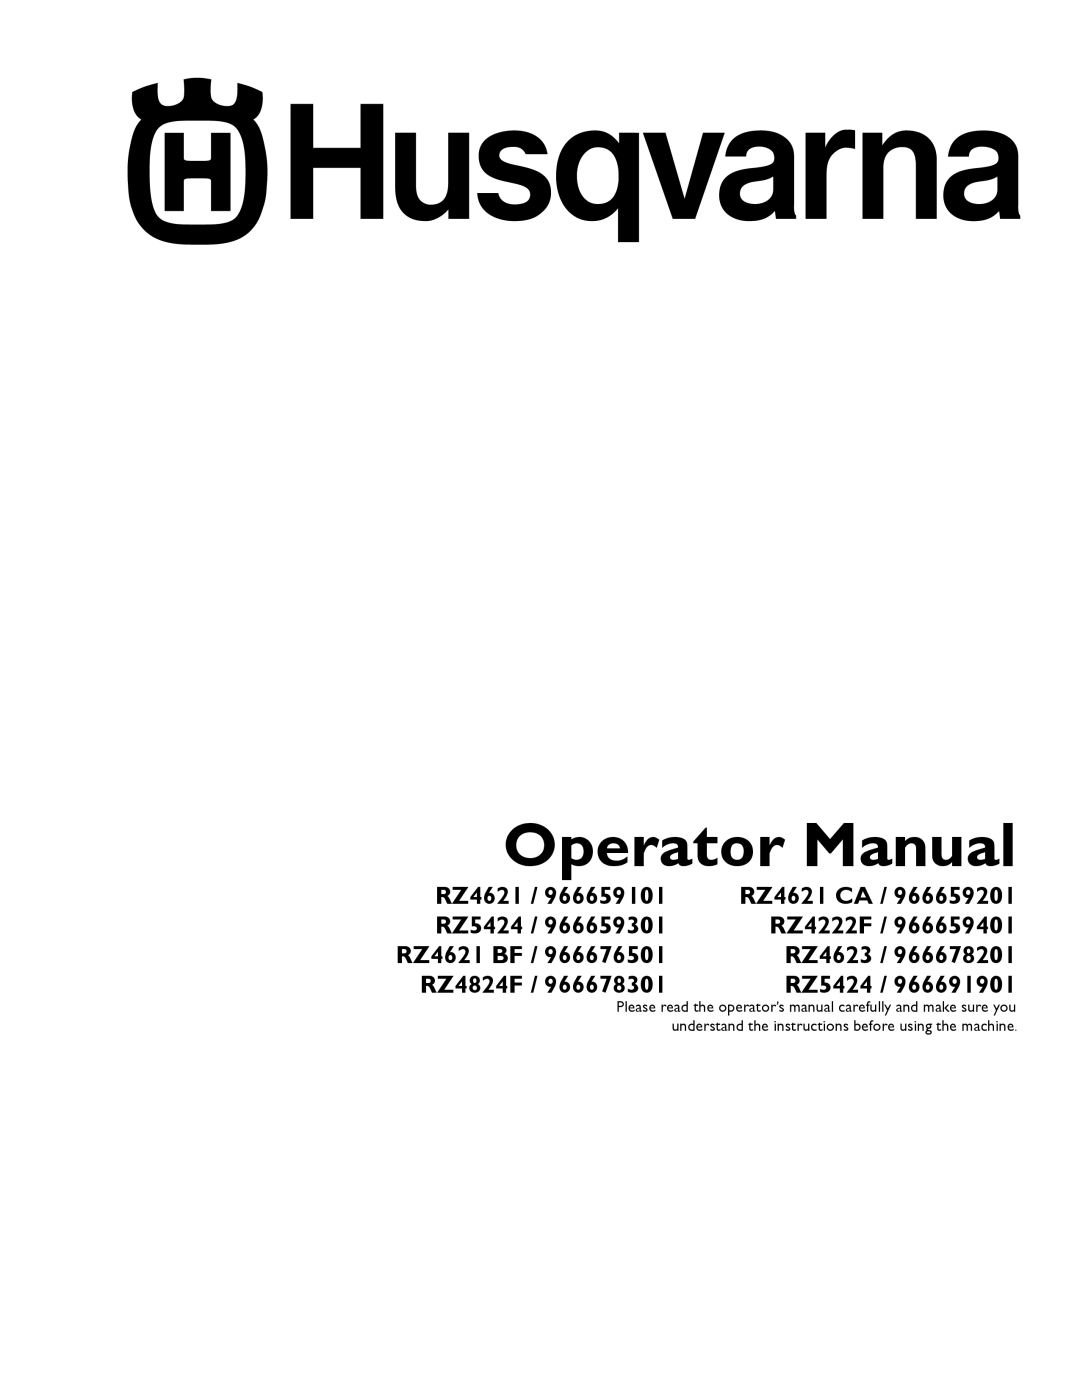 Husqvarna RZ4623 / 966678201 manual Operator Manual, RZ5424, RZ4222F, RZ4824F, RZ4621 CA, RZ4621 BF 